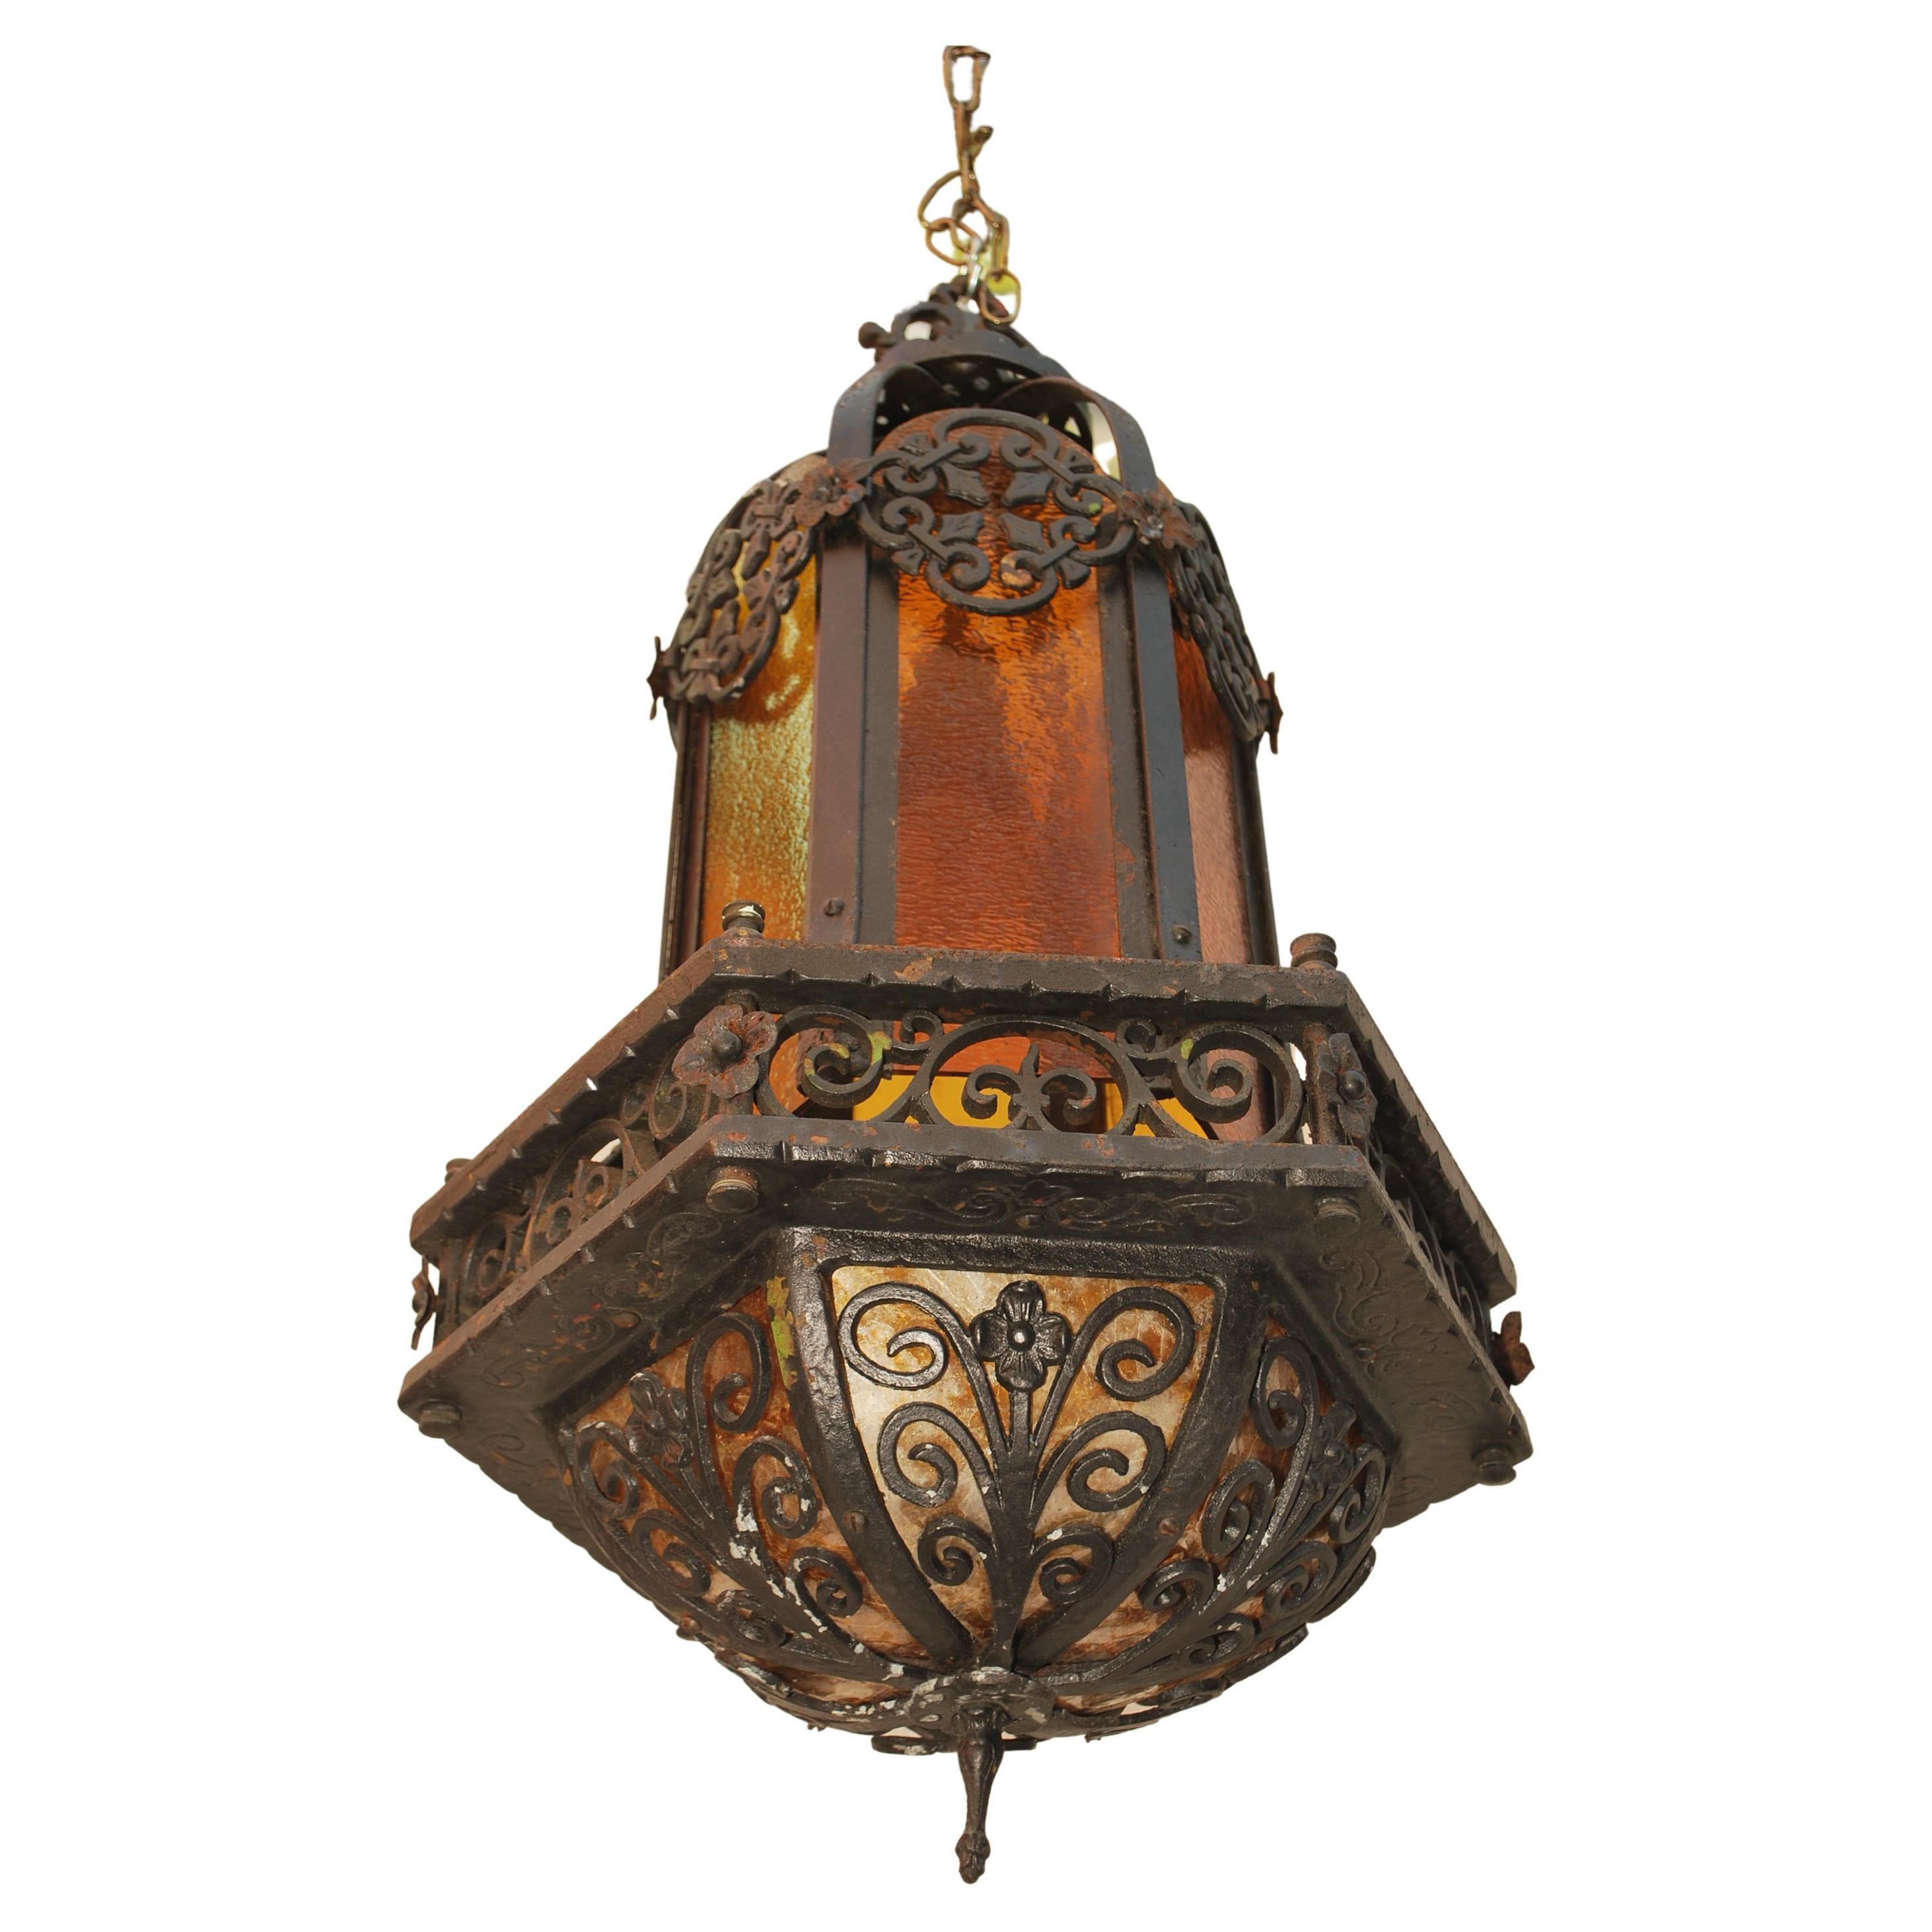 Belle lanterne en fonte des années 1920